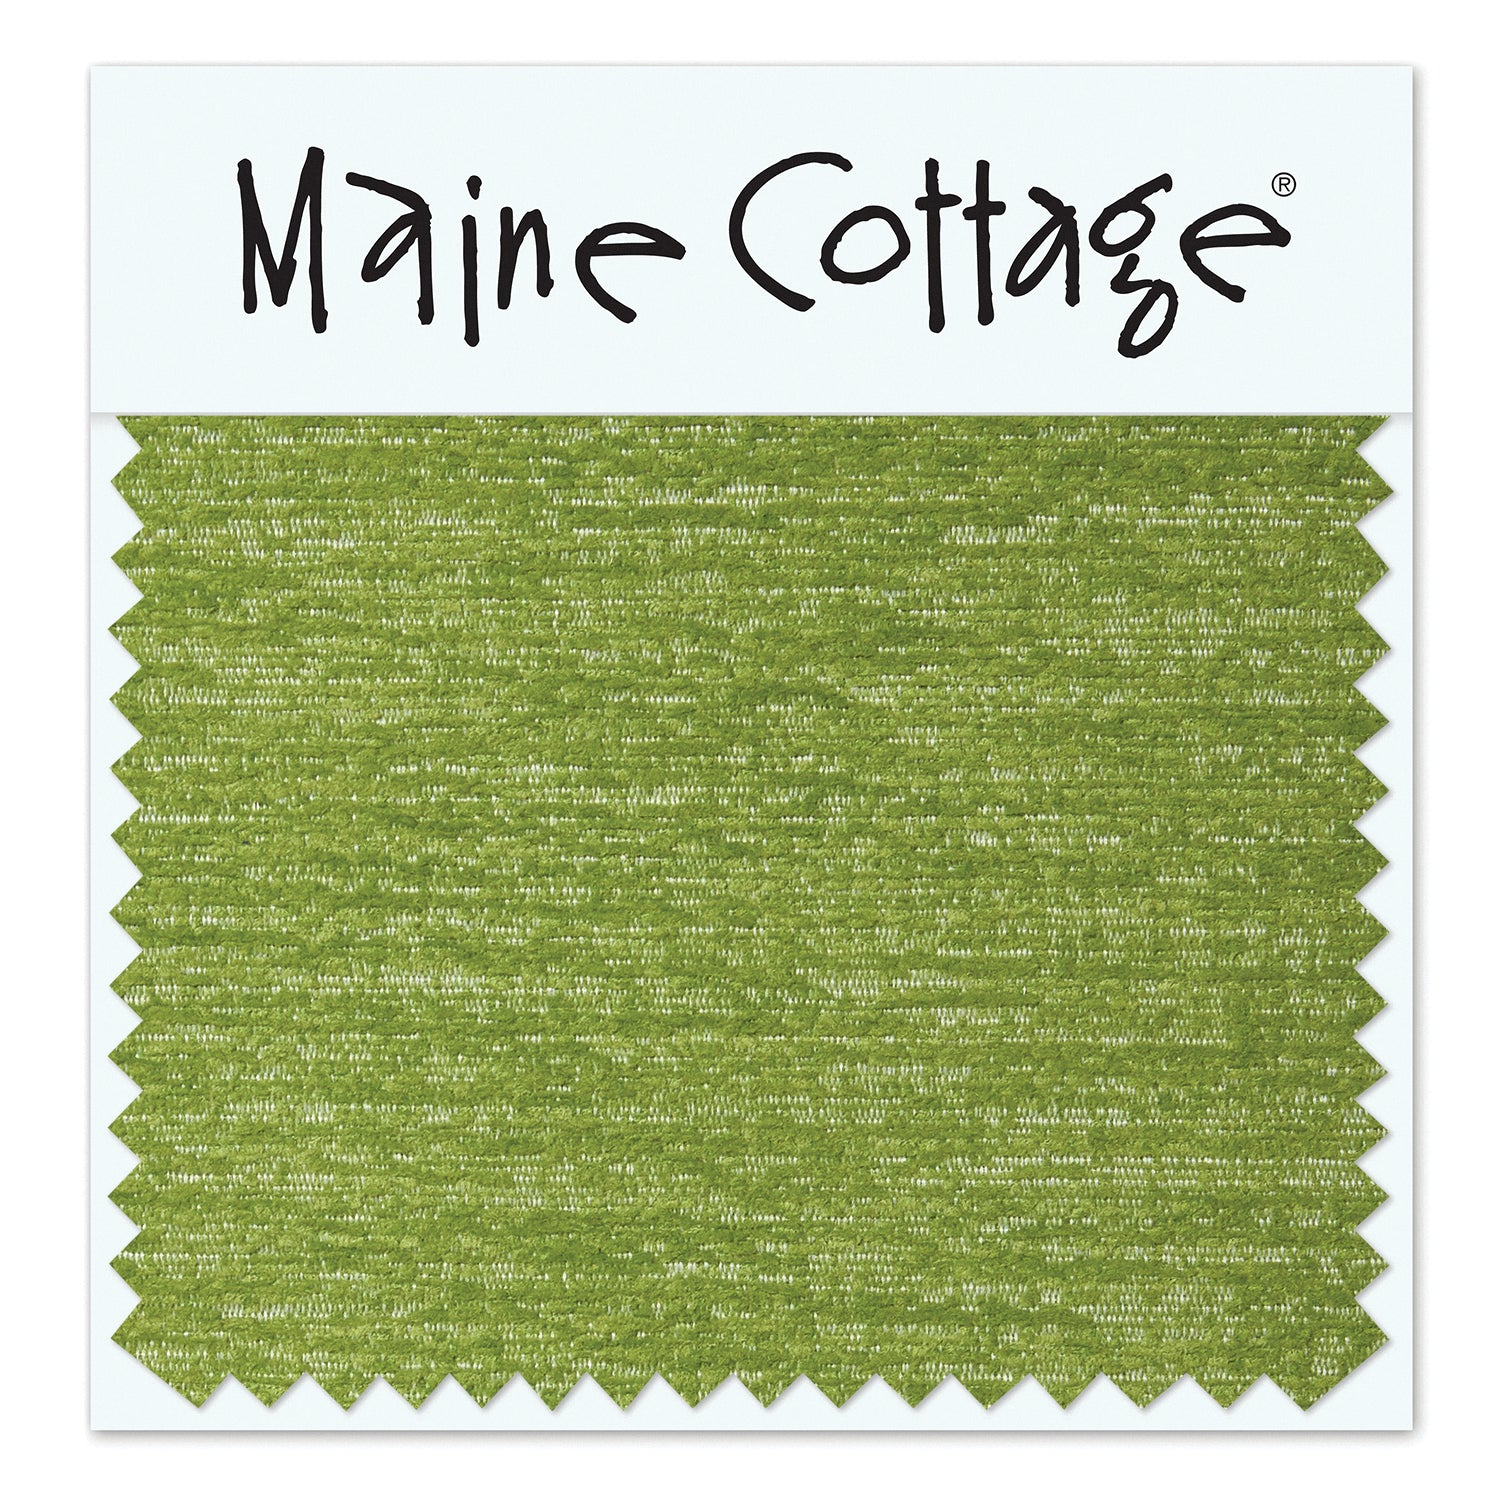 Maine Cottage Wheatgrass Fabric Sample | Furniture Performance Fabrics 